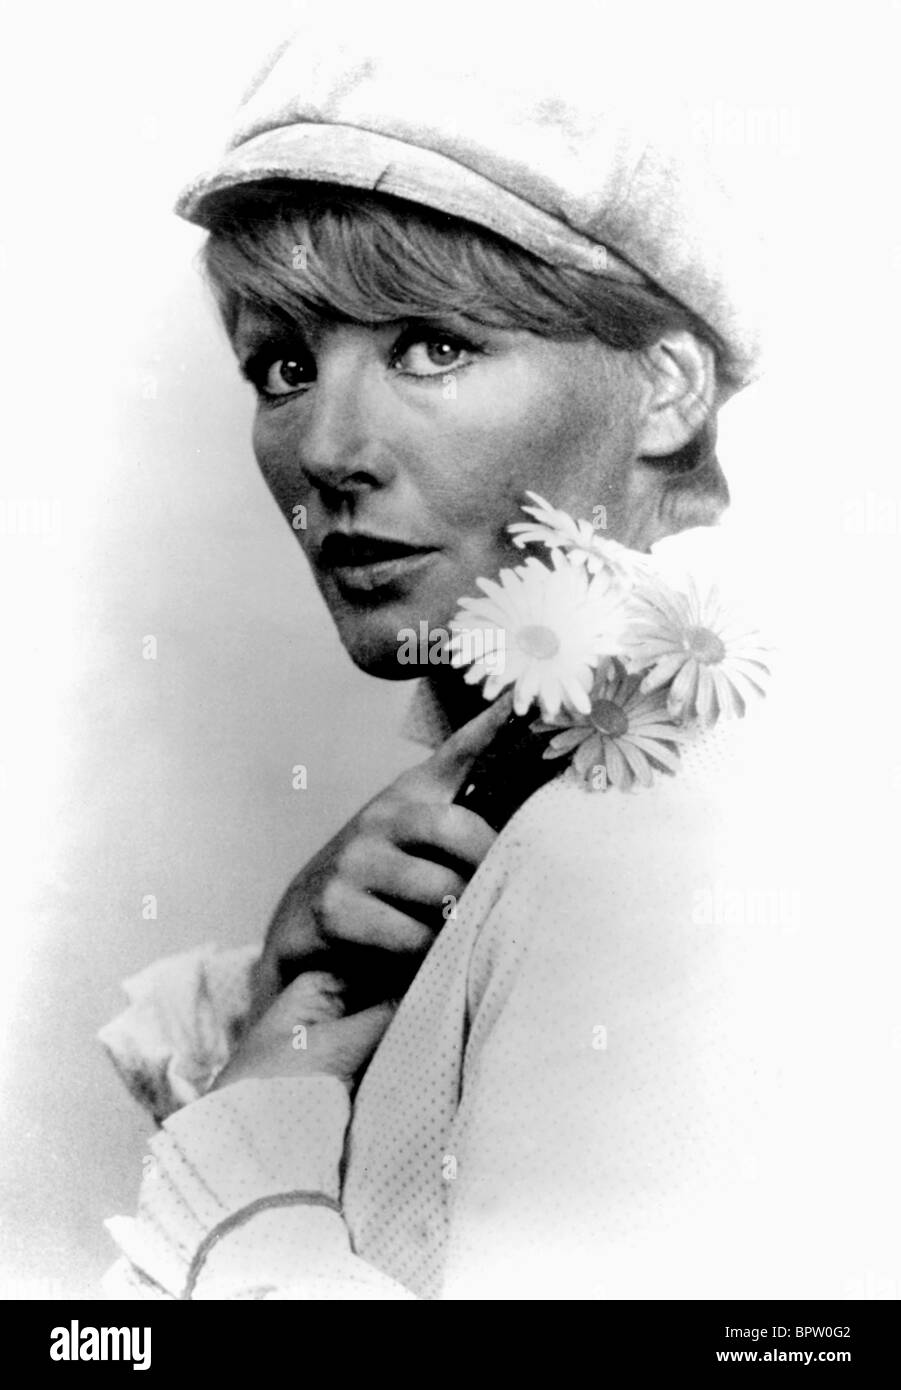 La chanteuse Petula Clark (1960) Banque D'Images